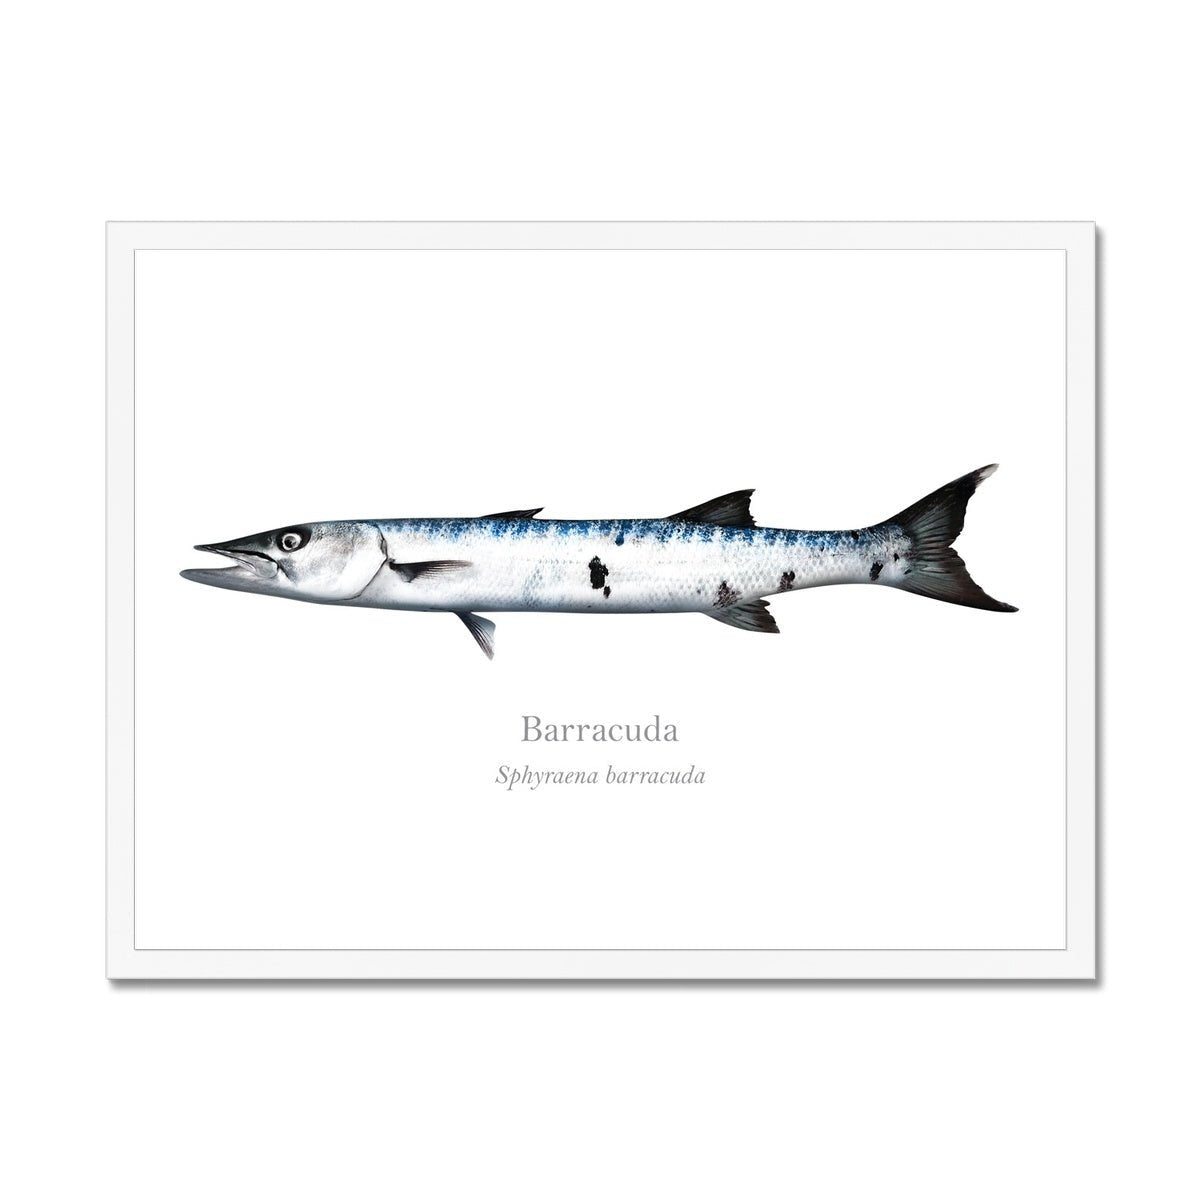 Barracuda - Framed Print - With Scientific Name - madfishlab.com